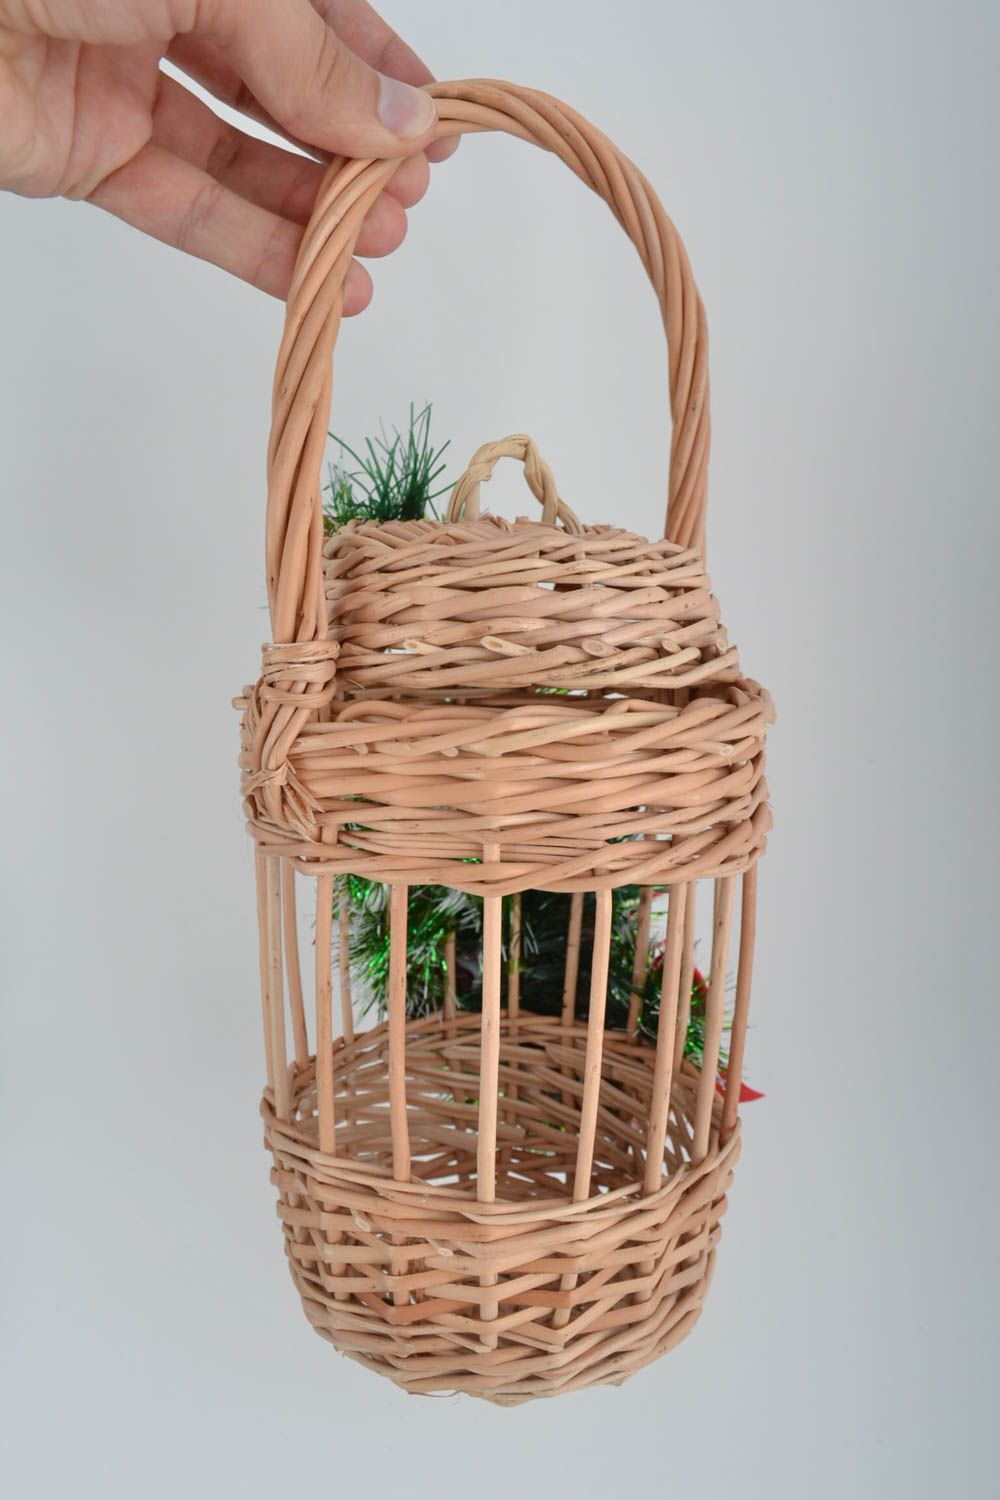 Unusual handmade woven basket Easter basket designs Easter decoration gift ideas photo 5